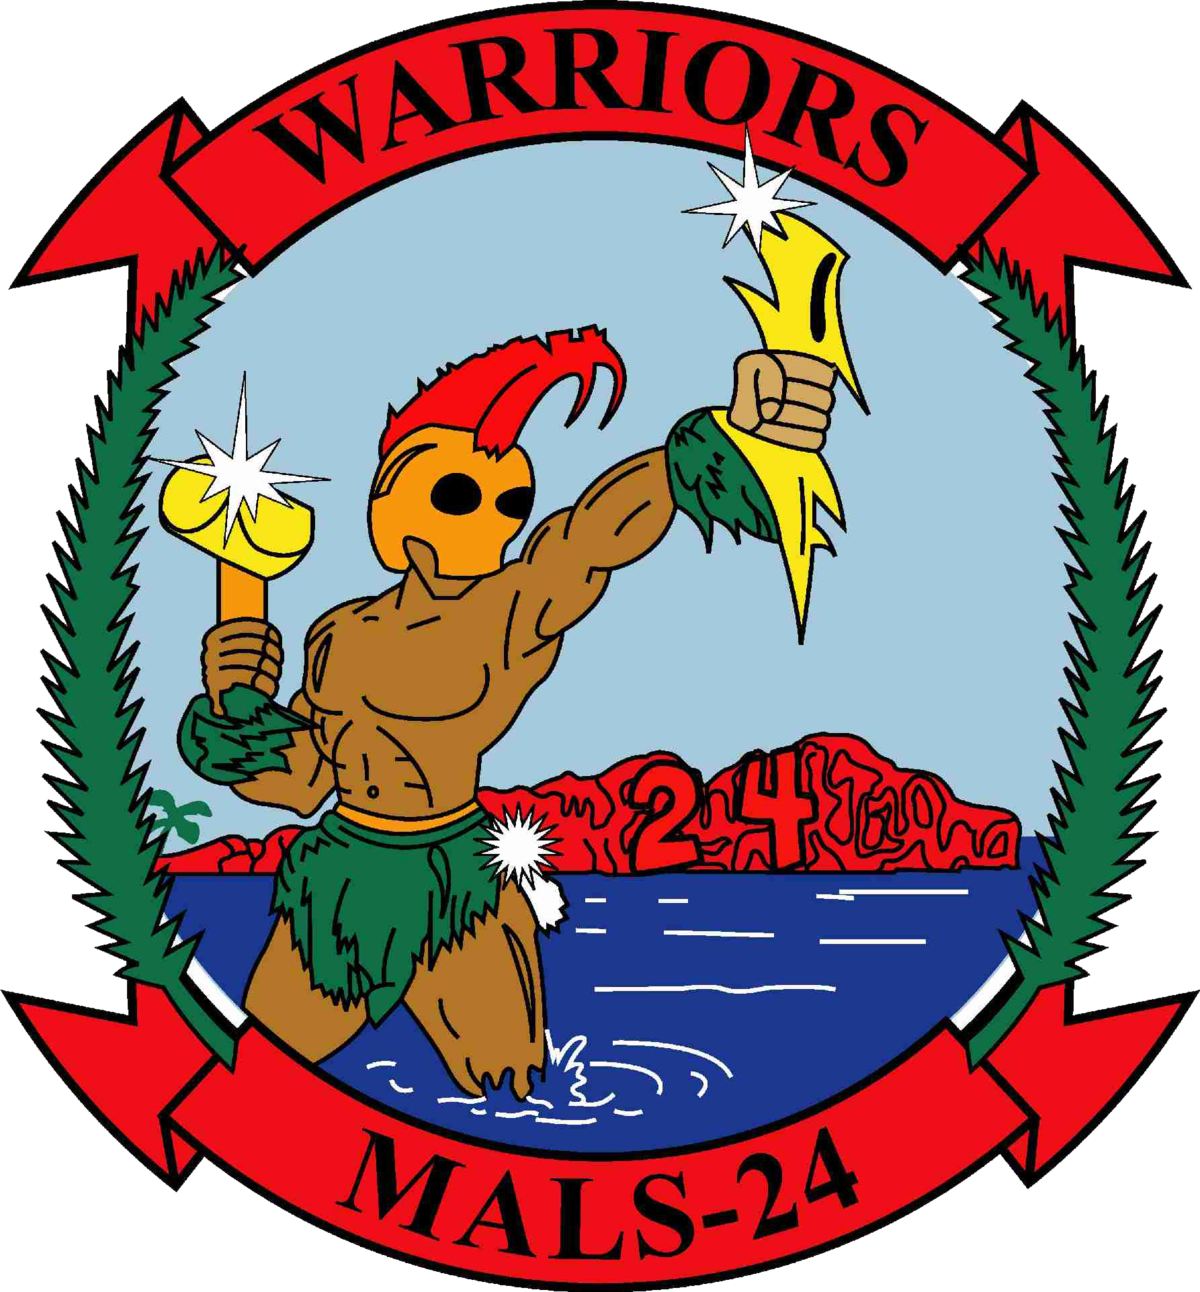 Mals 24 Warriors (1200x1292)